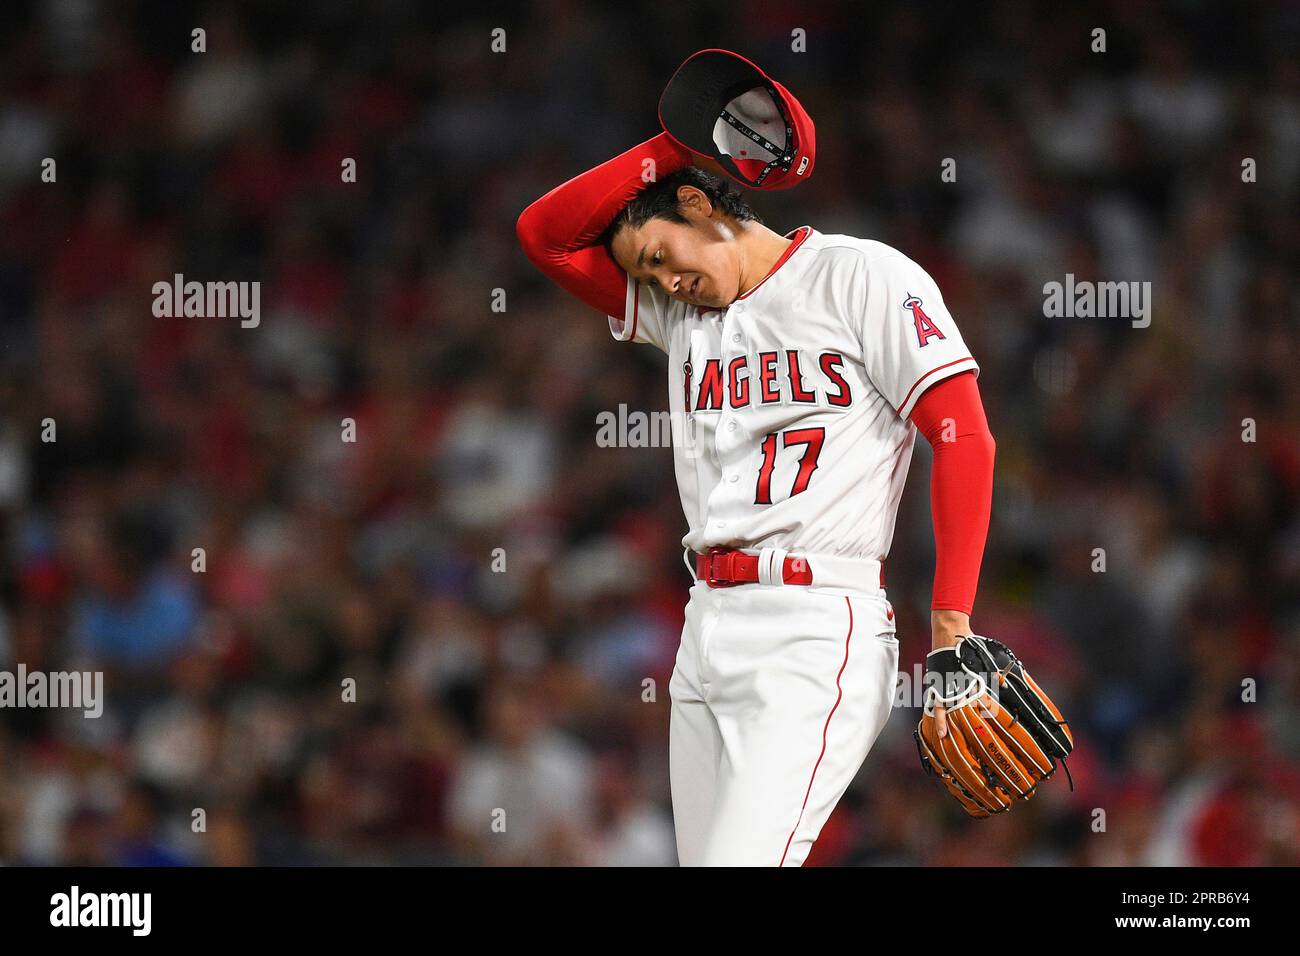 ANAHEIM, CA - APRIL 21: Los Angeles Angels pitcher Shohei Ohtani